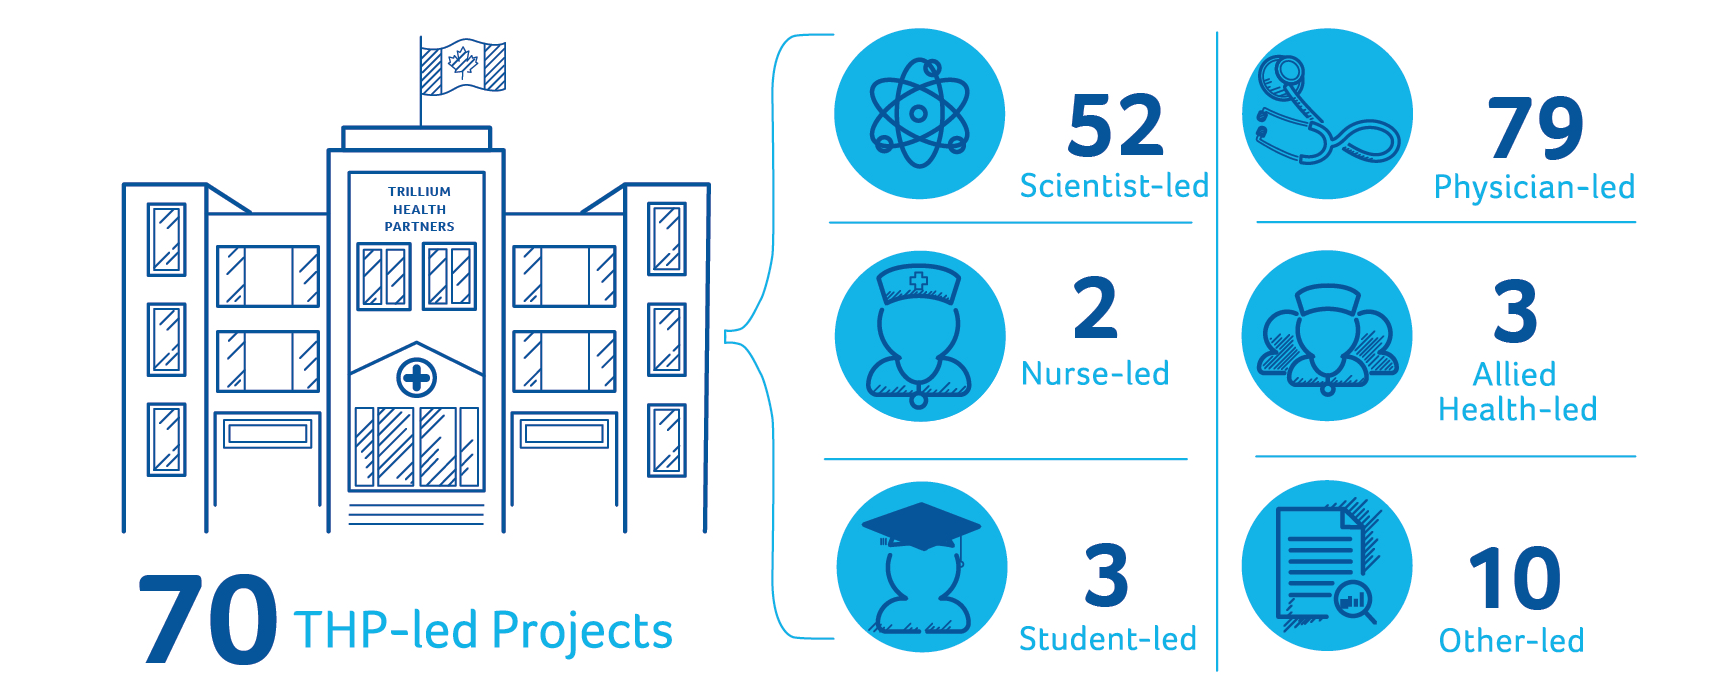 156 THP-led Projects. Of those: 49 Scientist-led, 86 Physician-led, 2 Nurse-led, 4 Allied Health-led. 4 Student-led, 11 Other-led.